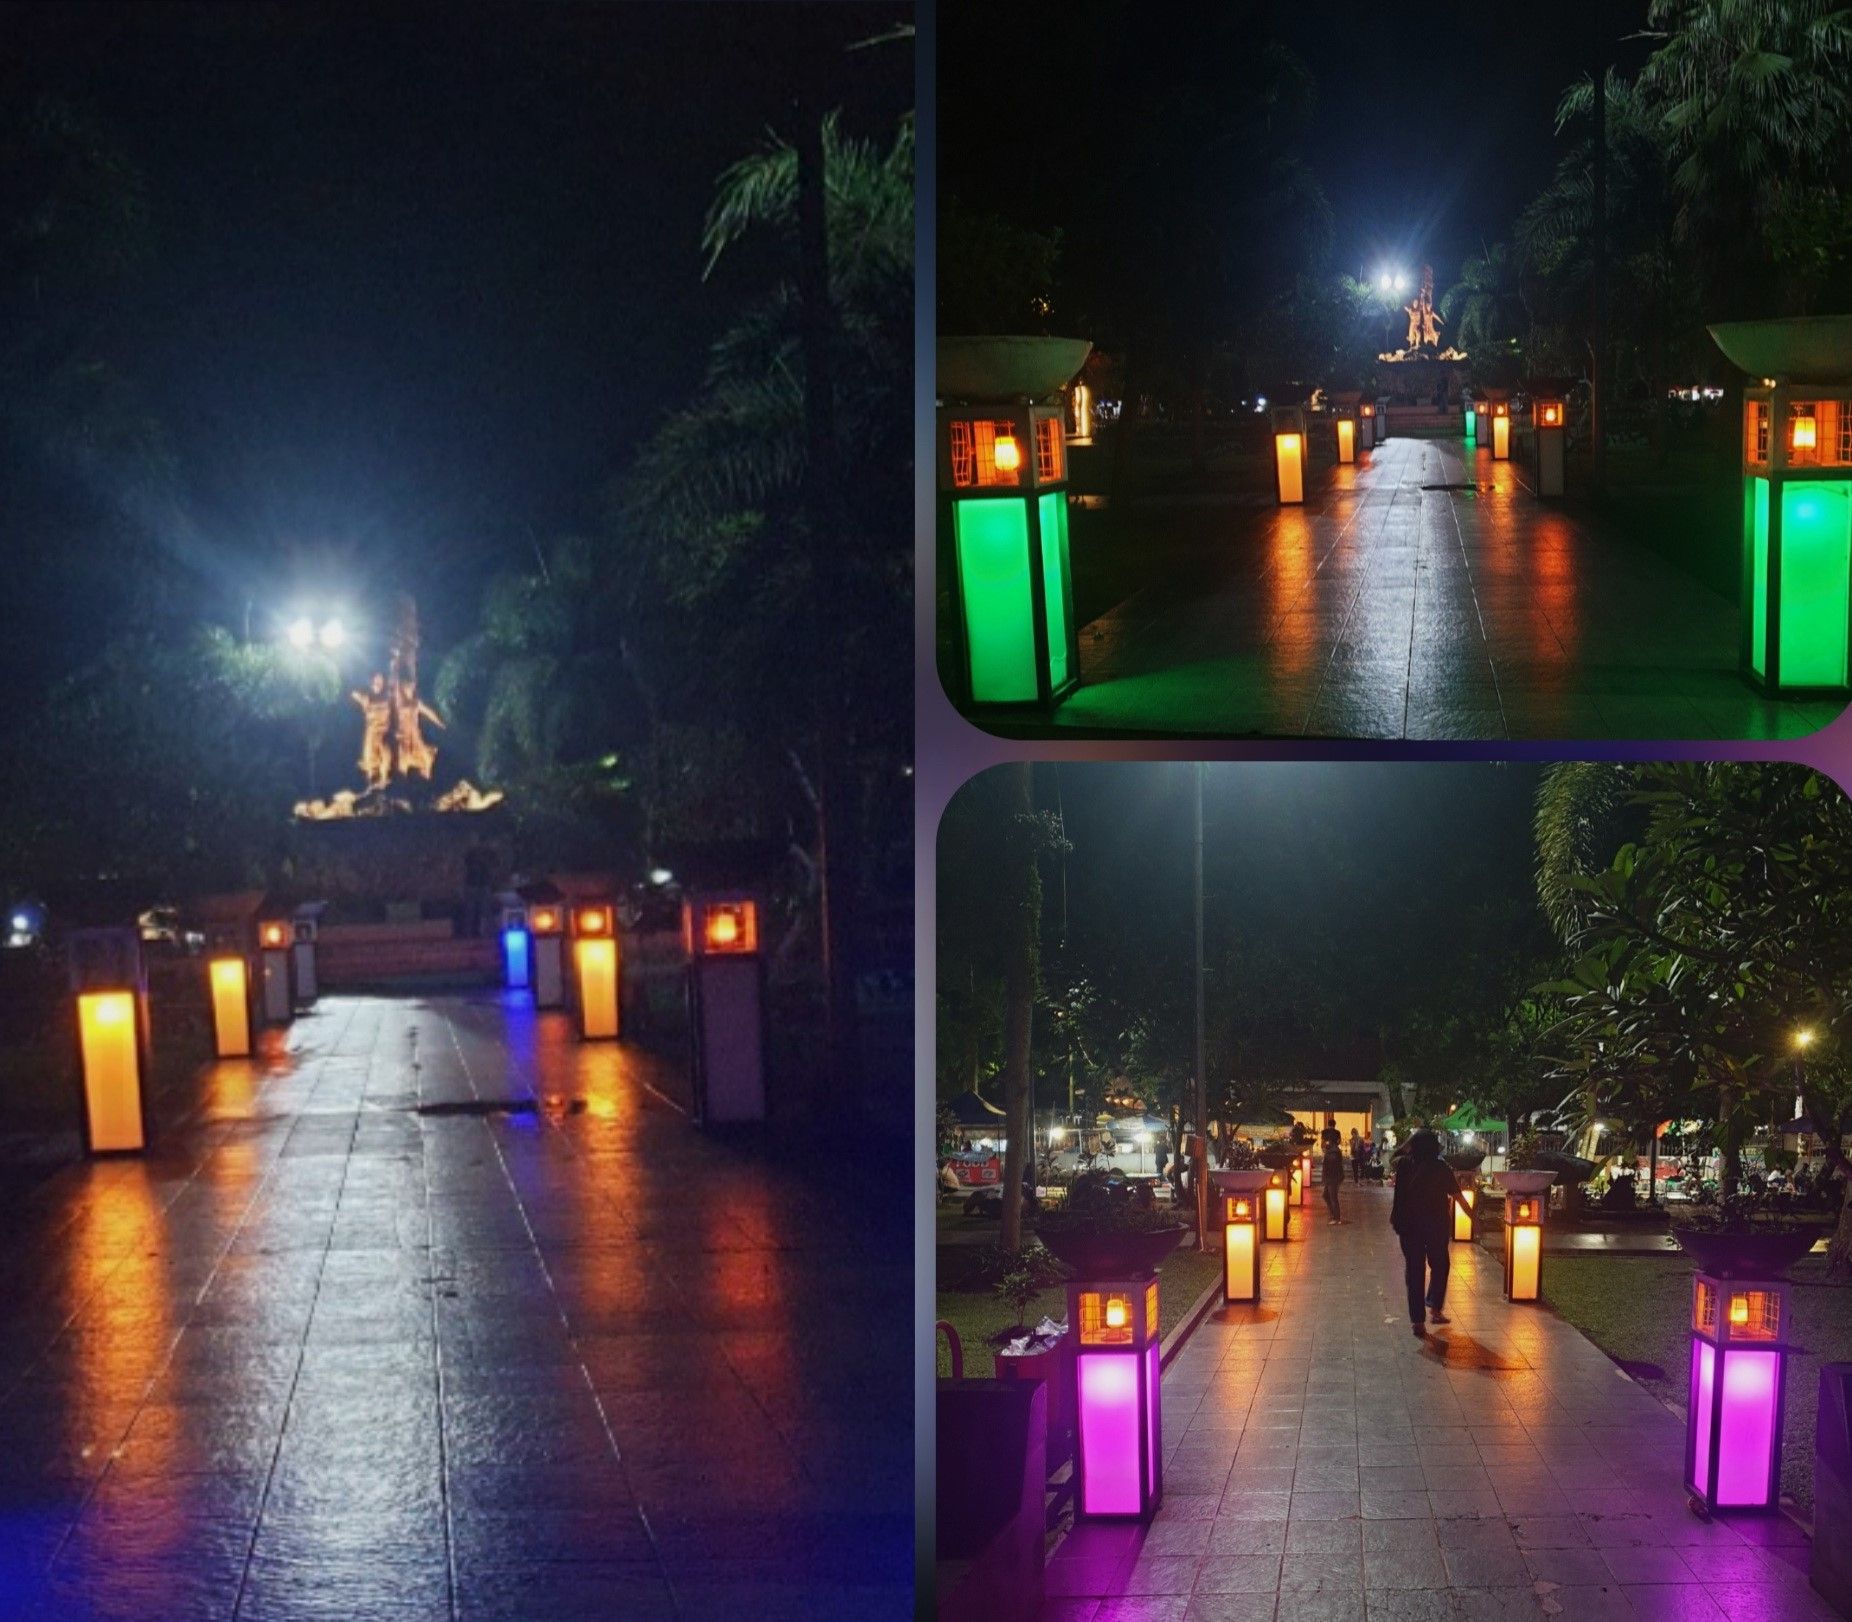 Jalan di dalam Alun-alun Kota Tasik dihiasi oleh lampu berwarna-warni menambah keindahan taman